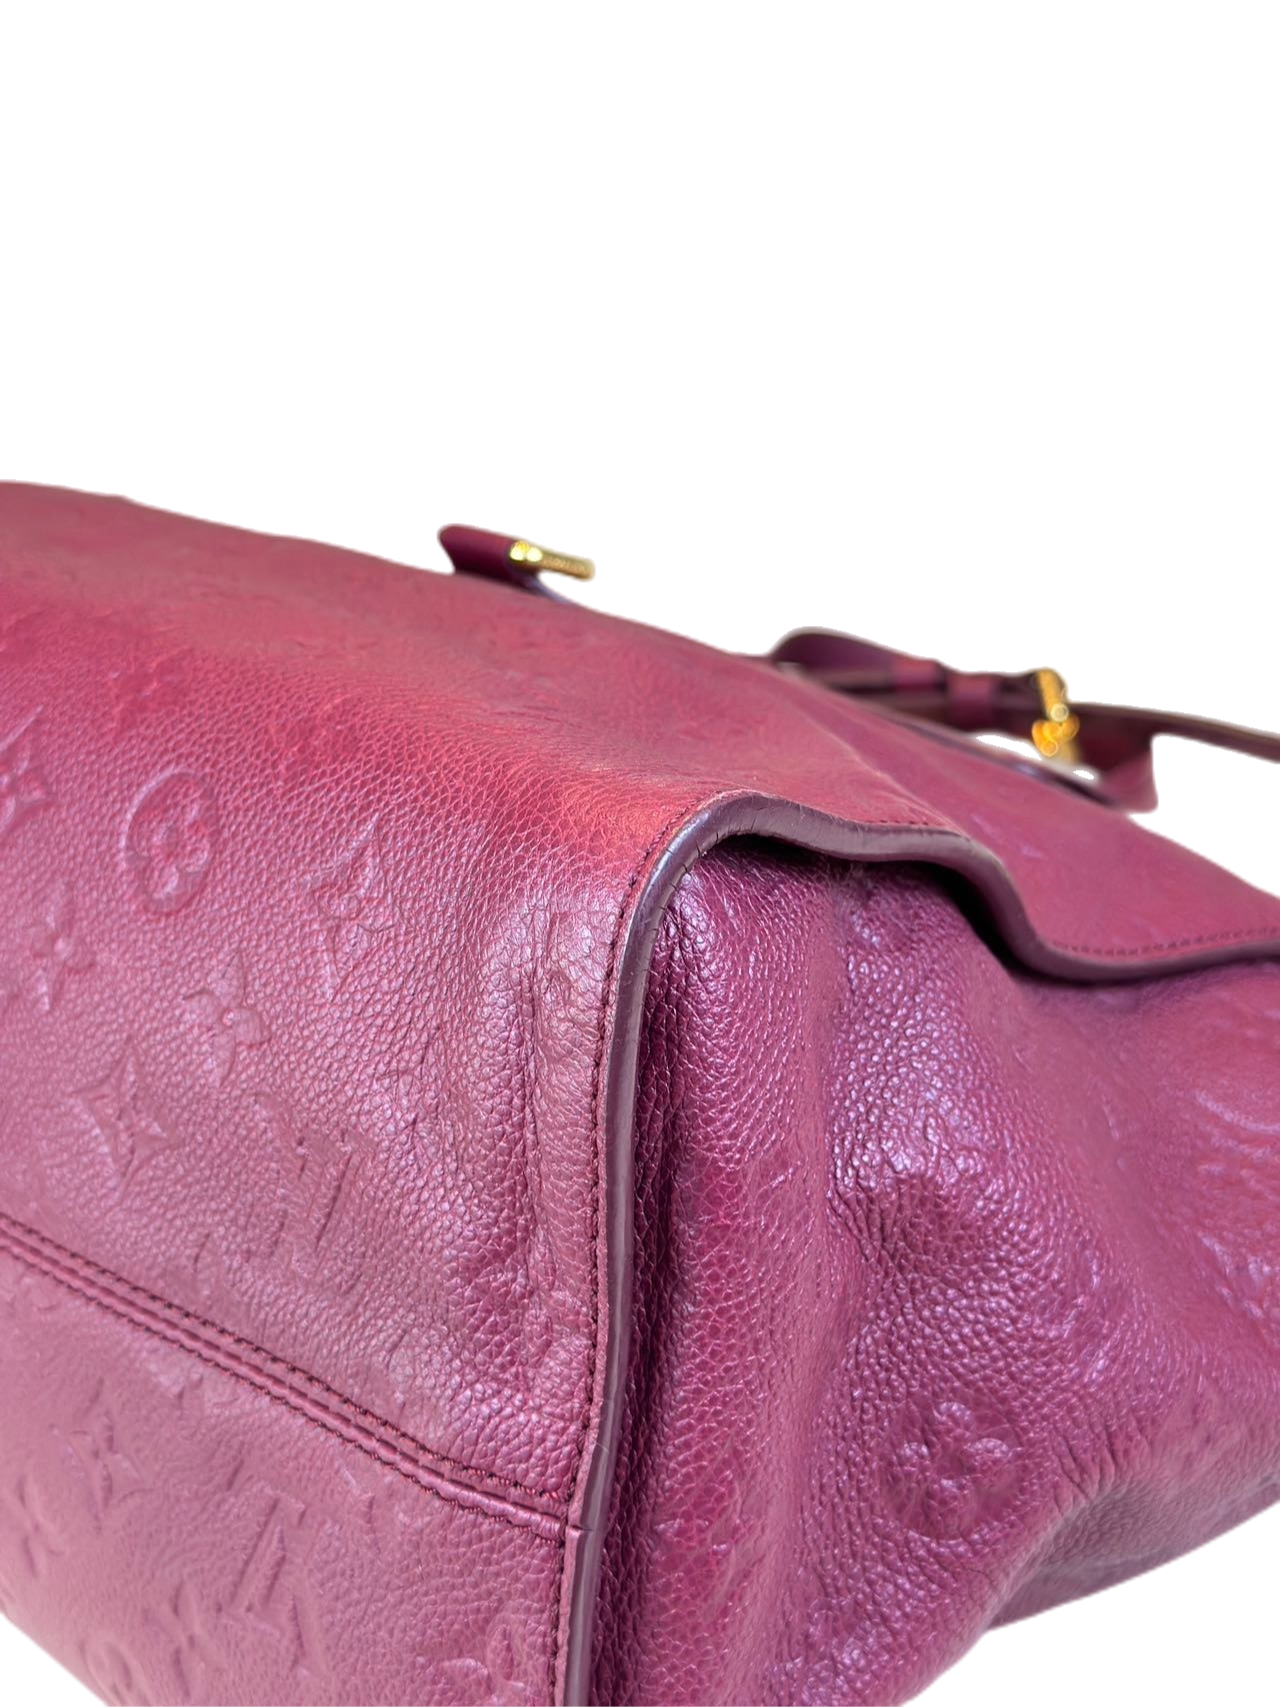 Preloved Louis Vuitton Monogram Leather Shoulder Bag Totes